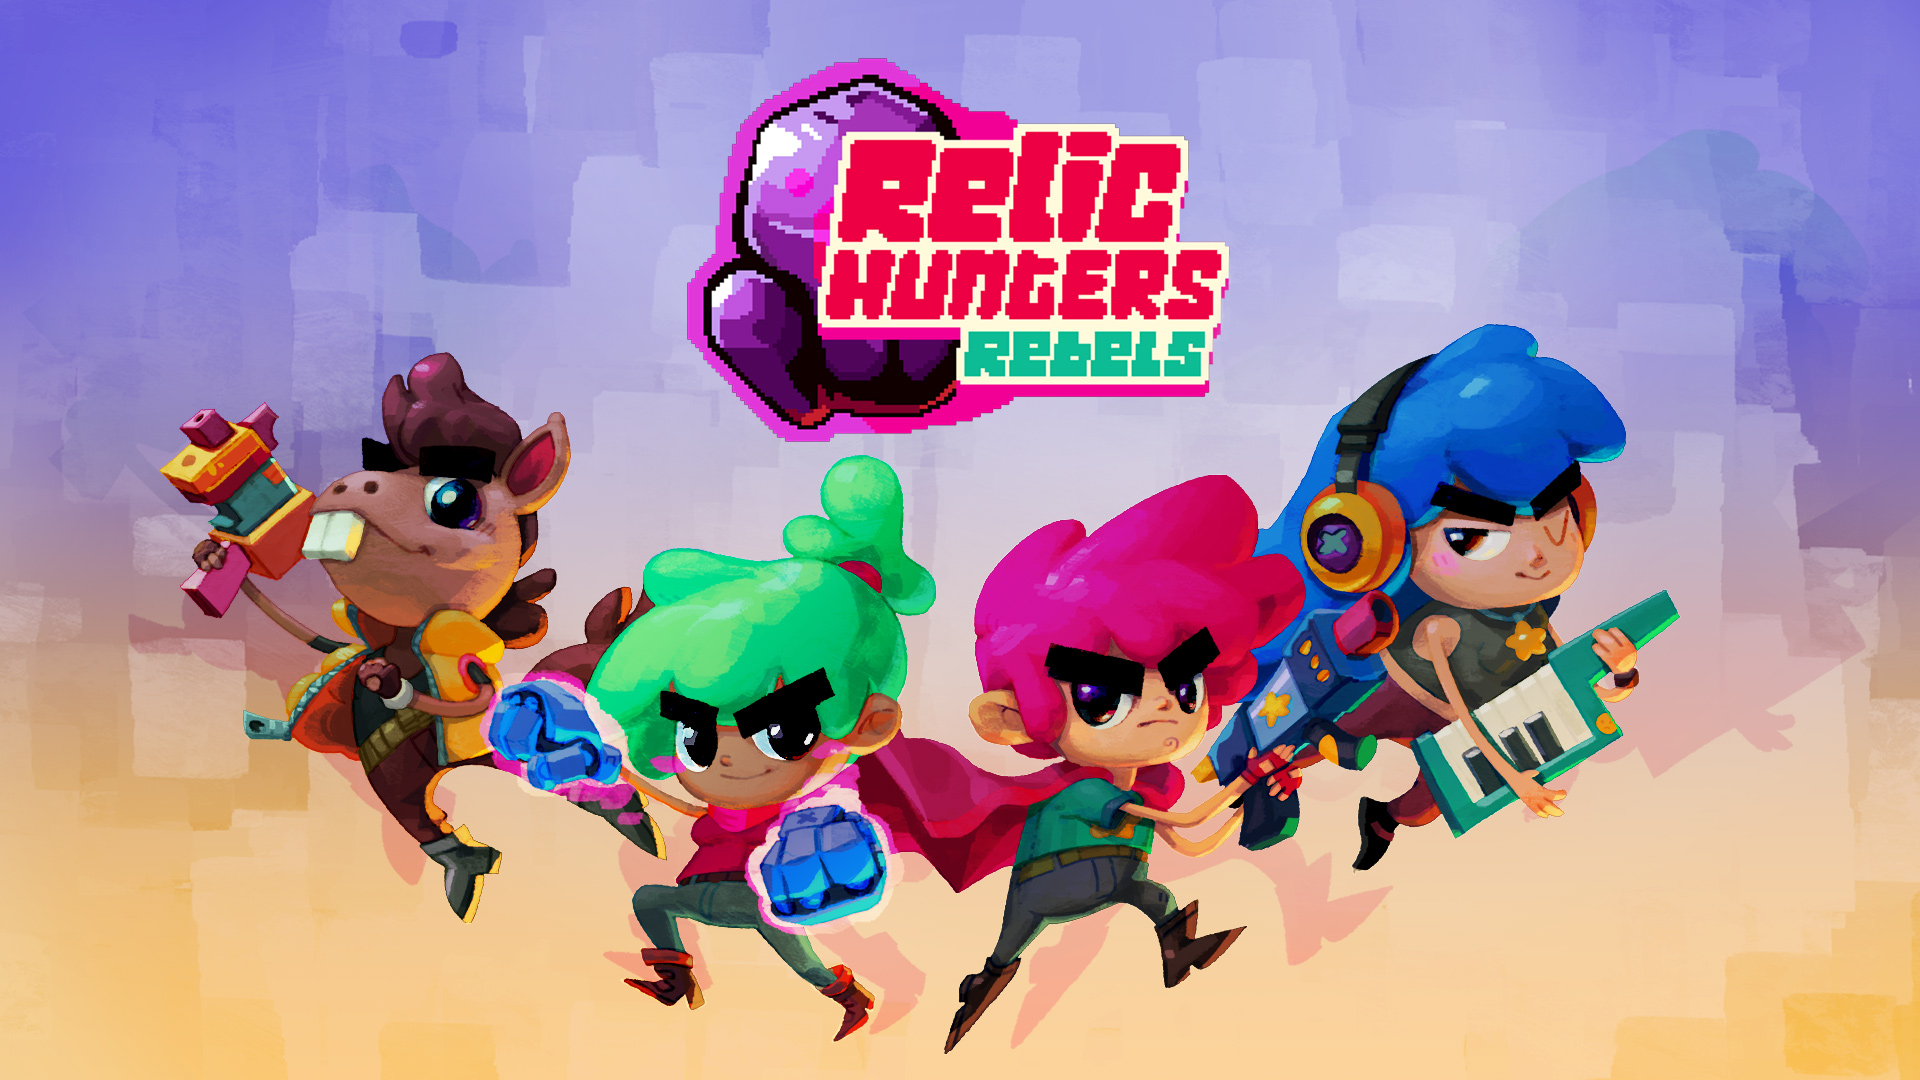 Relic Hunters Rebels | Game brasileiro chegará ao catálogo da Netflix